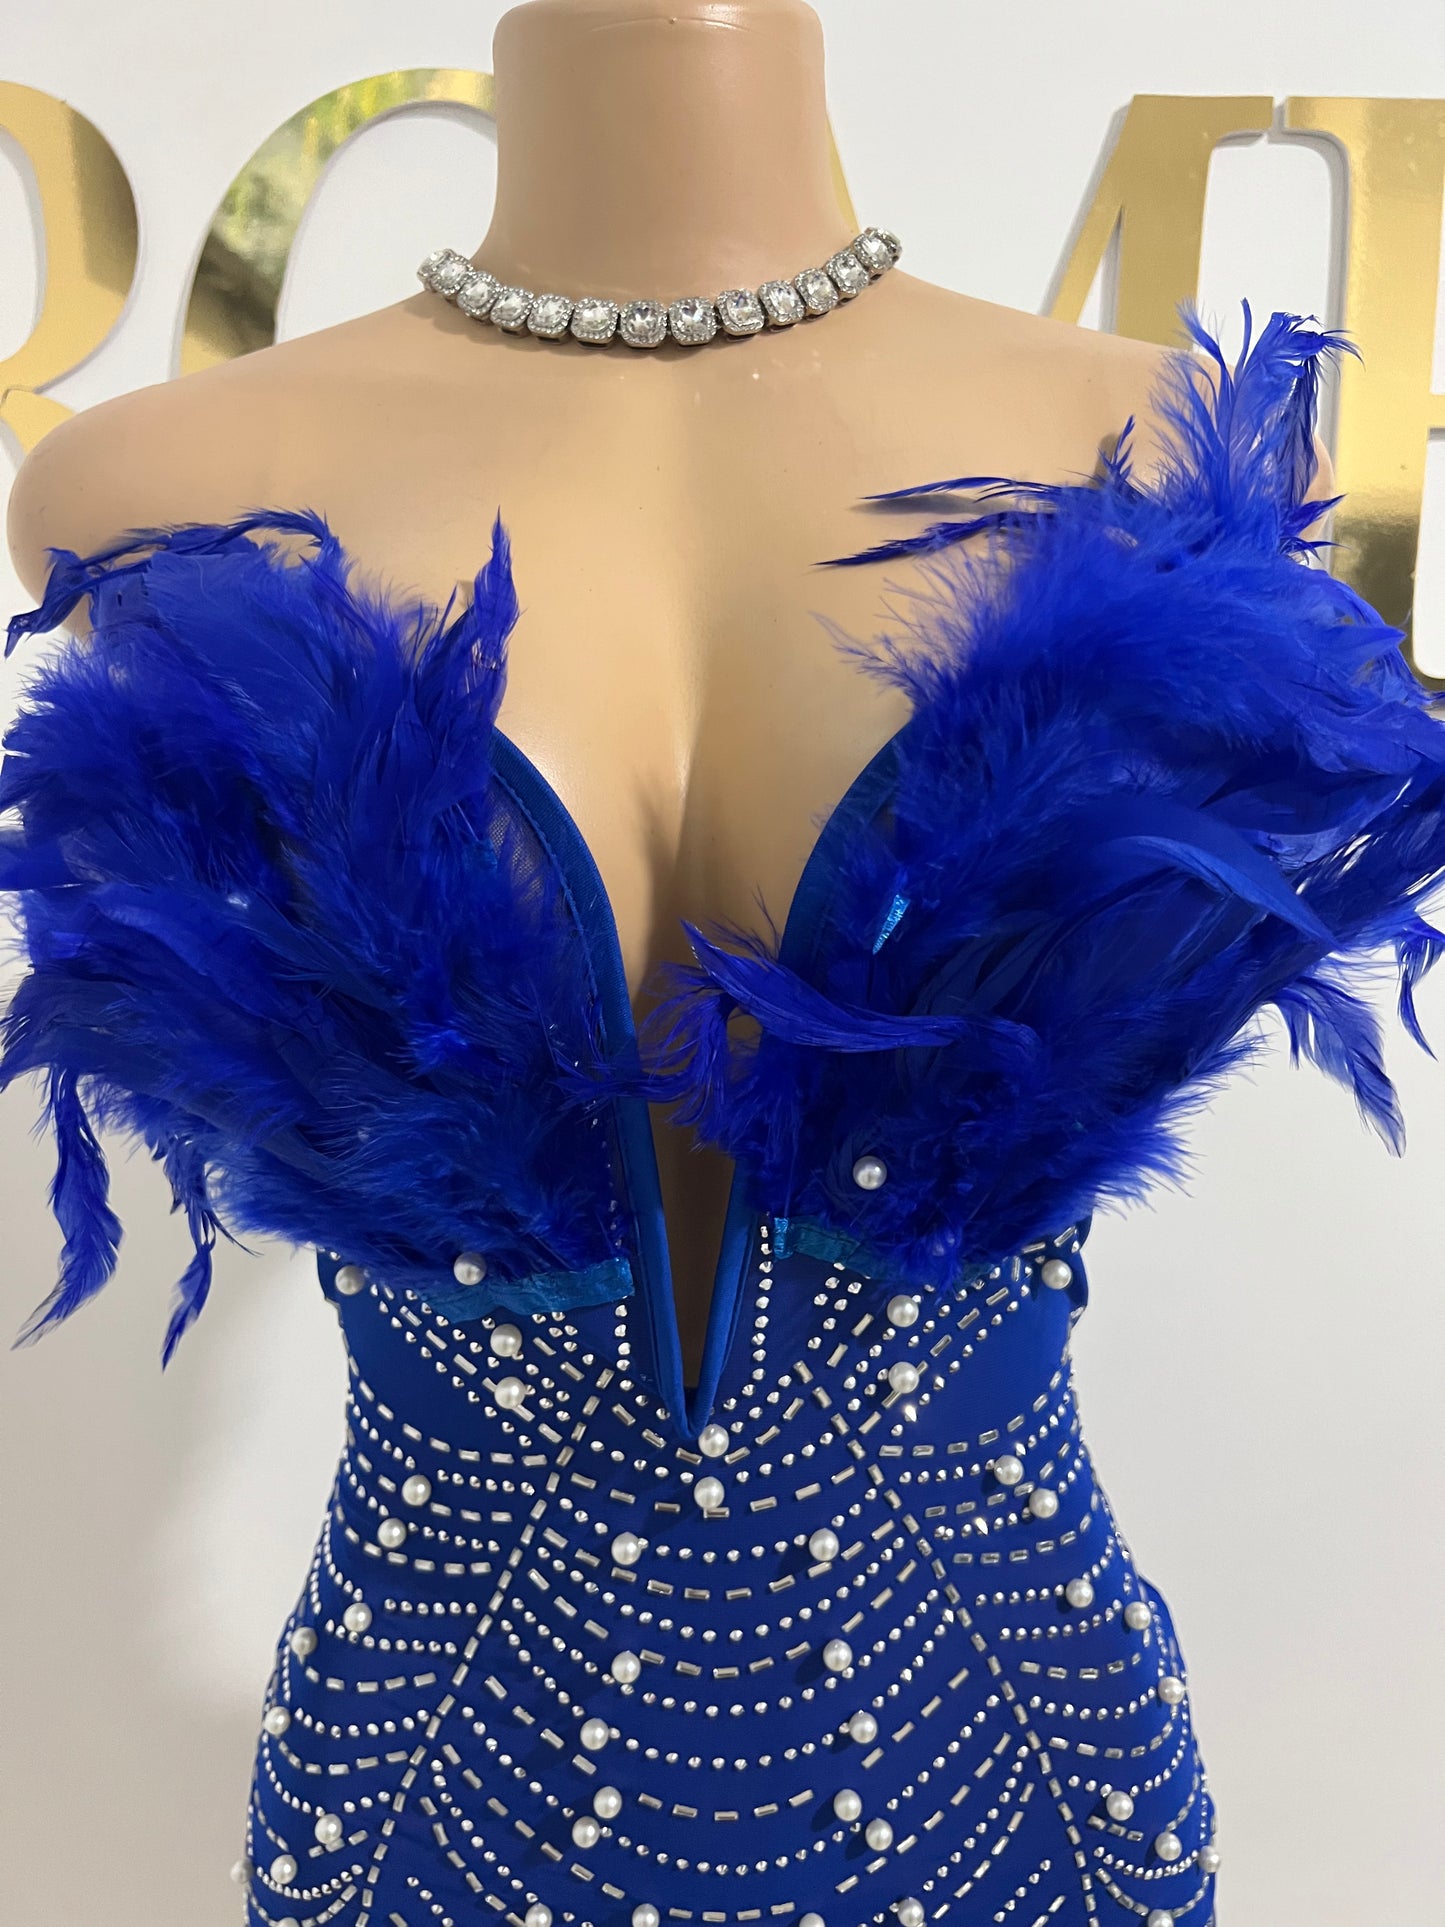 Elle Feather Crystal Dress (Blue)